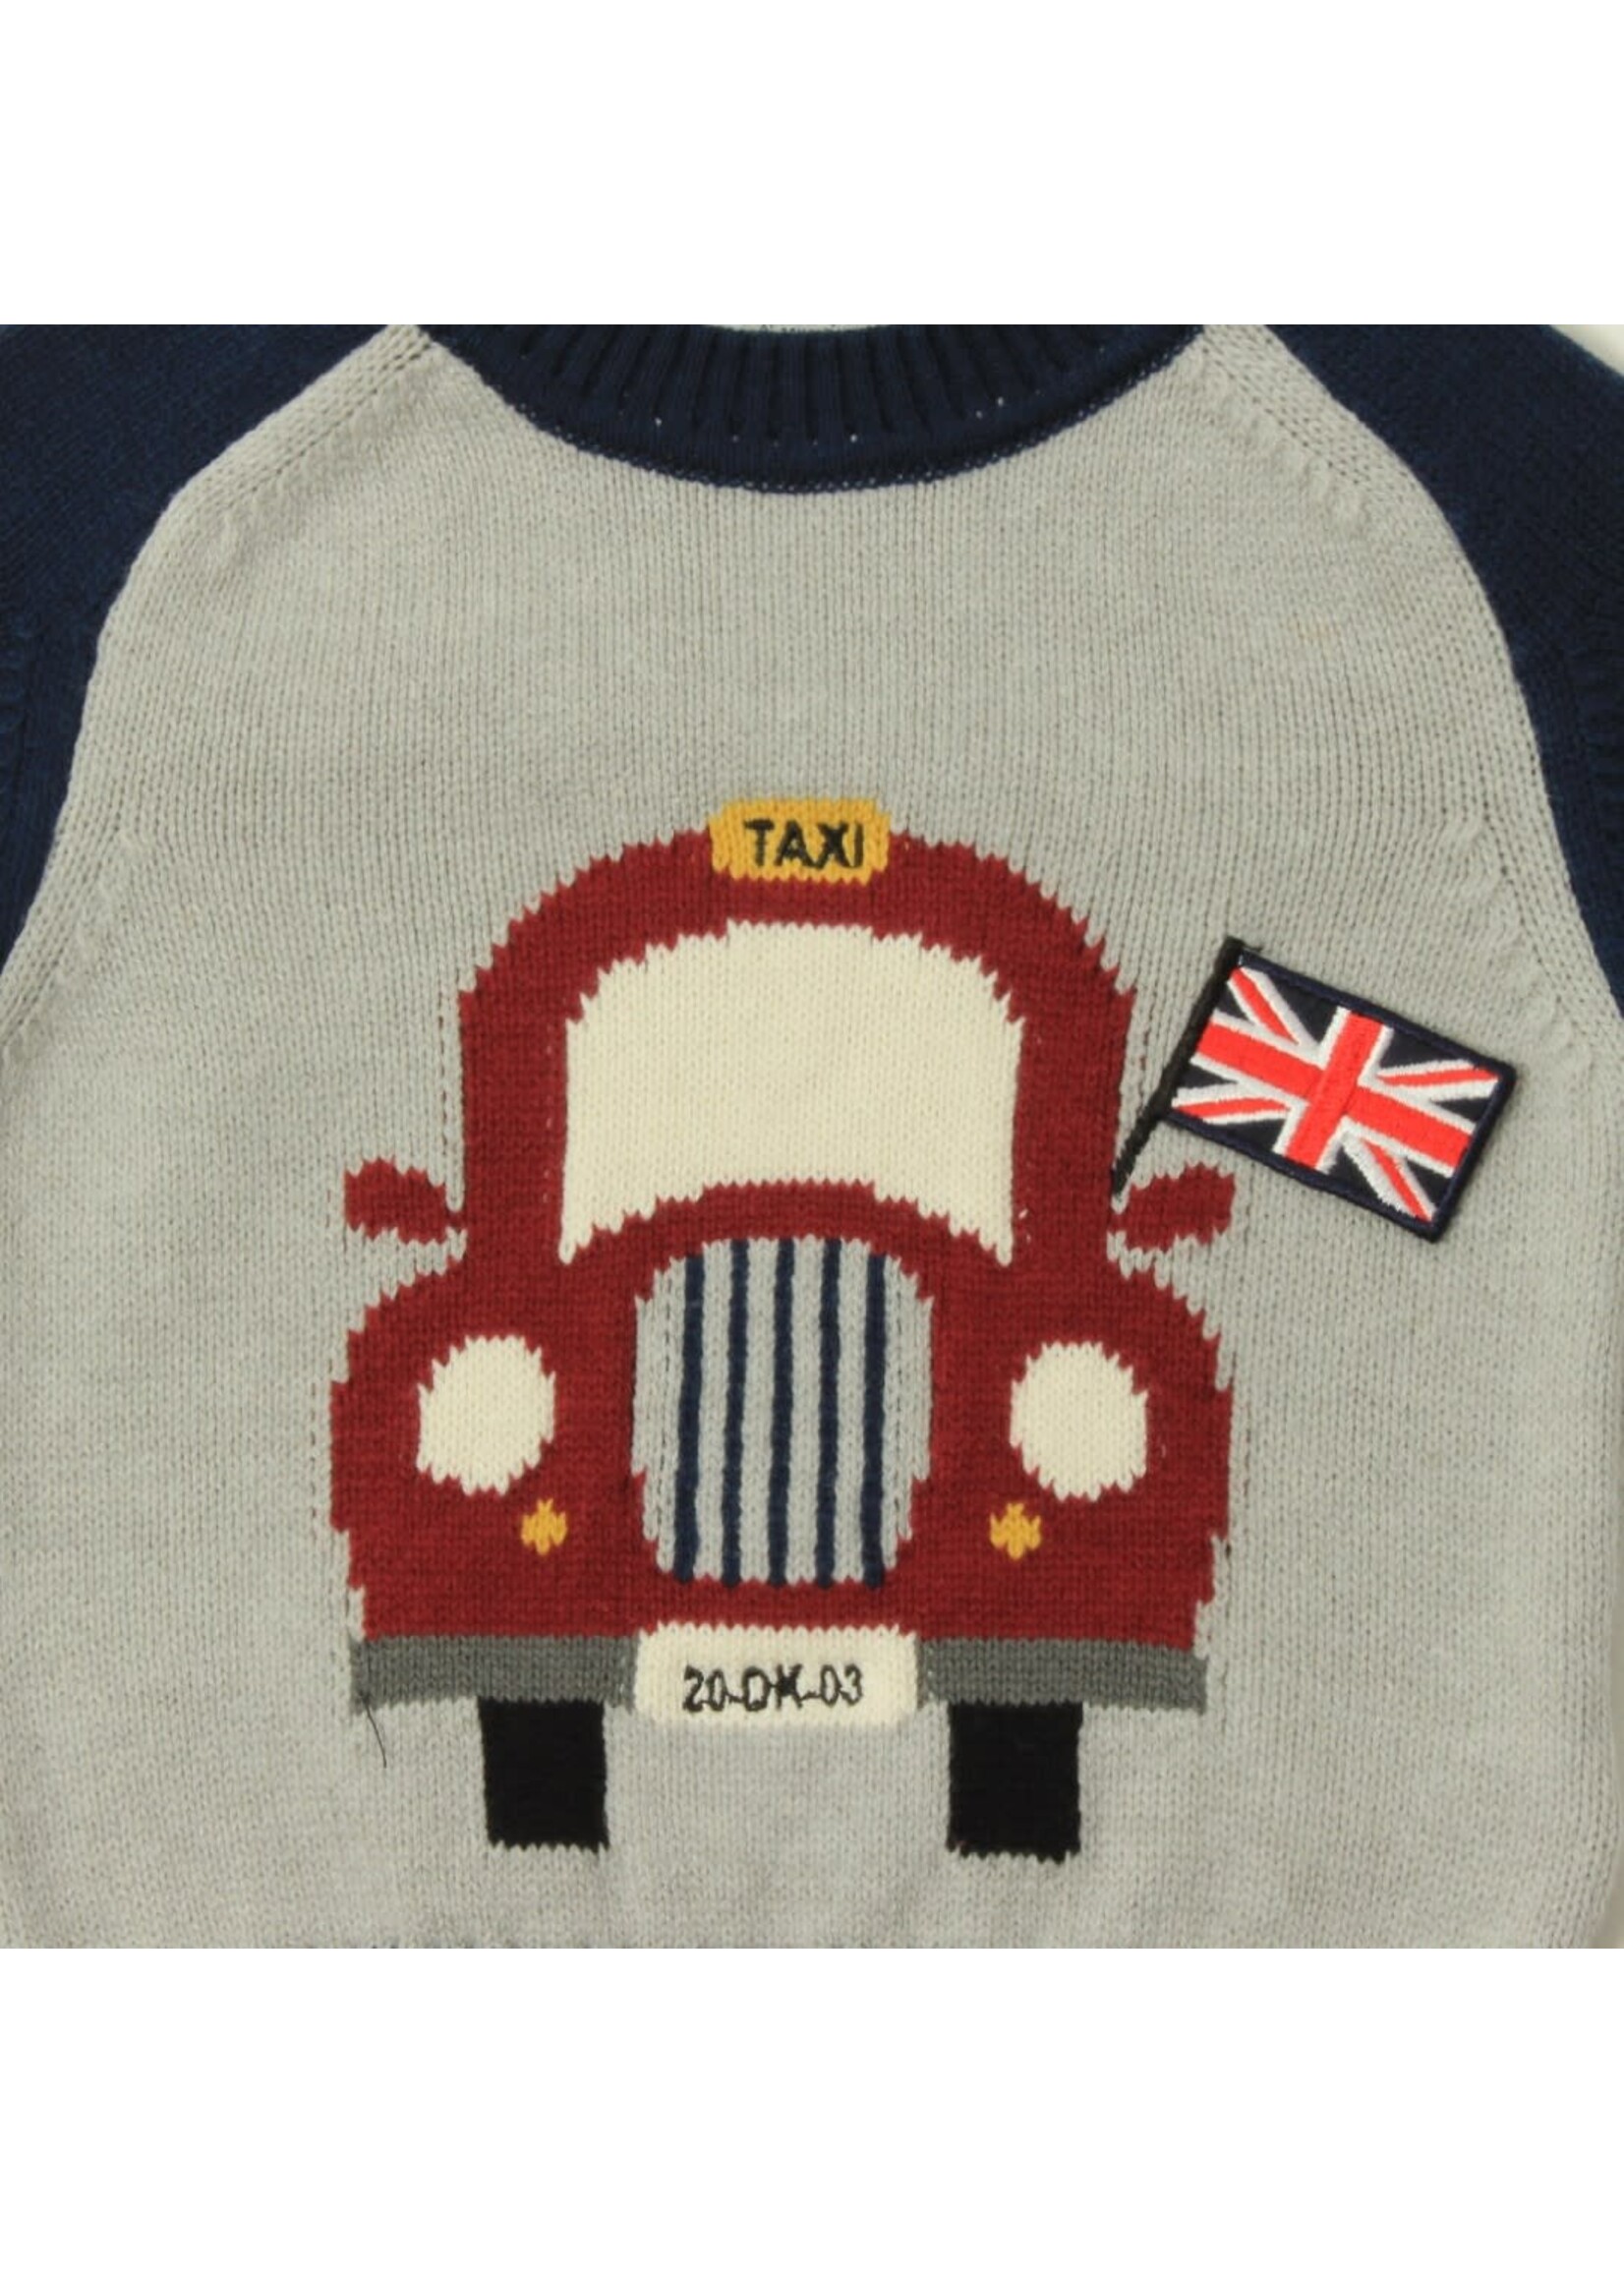 Dr Kid Baby Boy Sweater 295-Marinho Esc-DK521